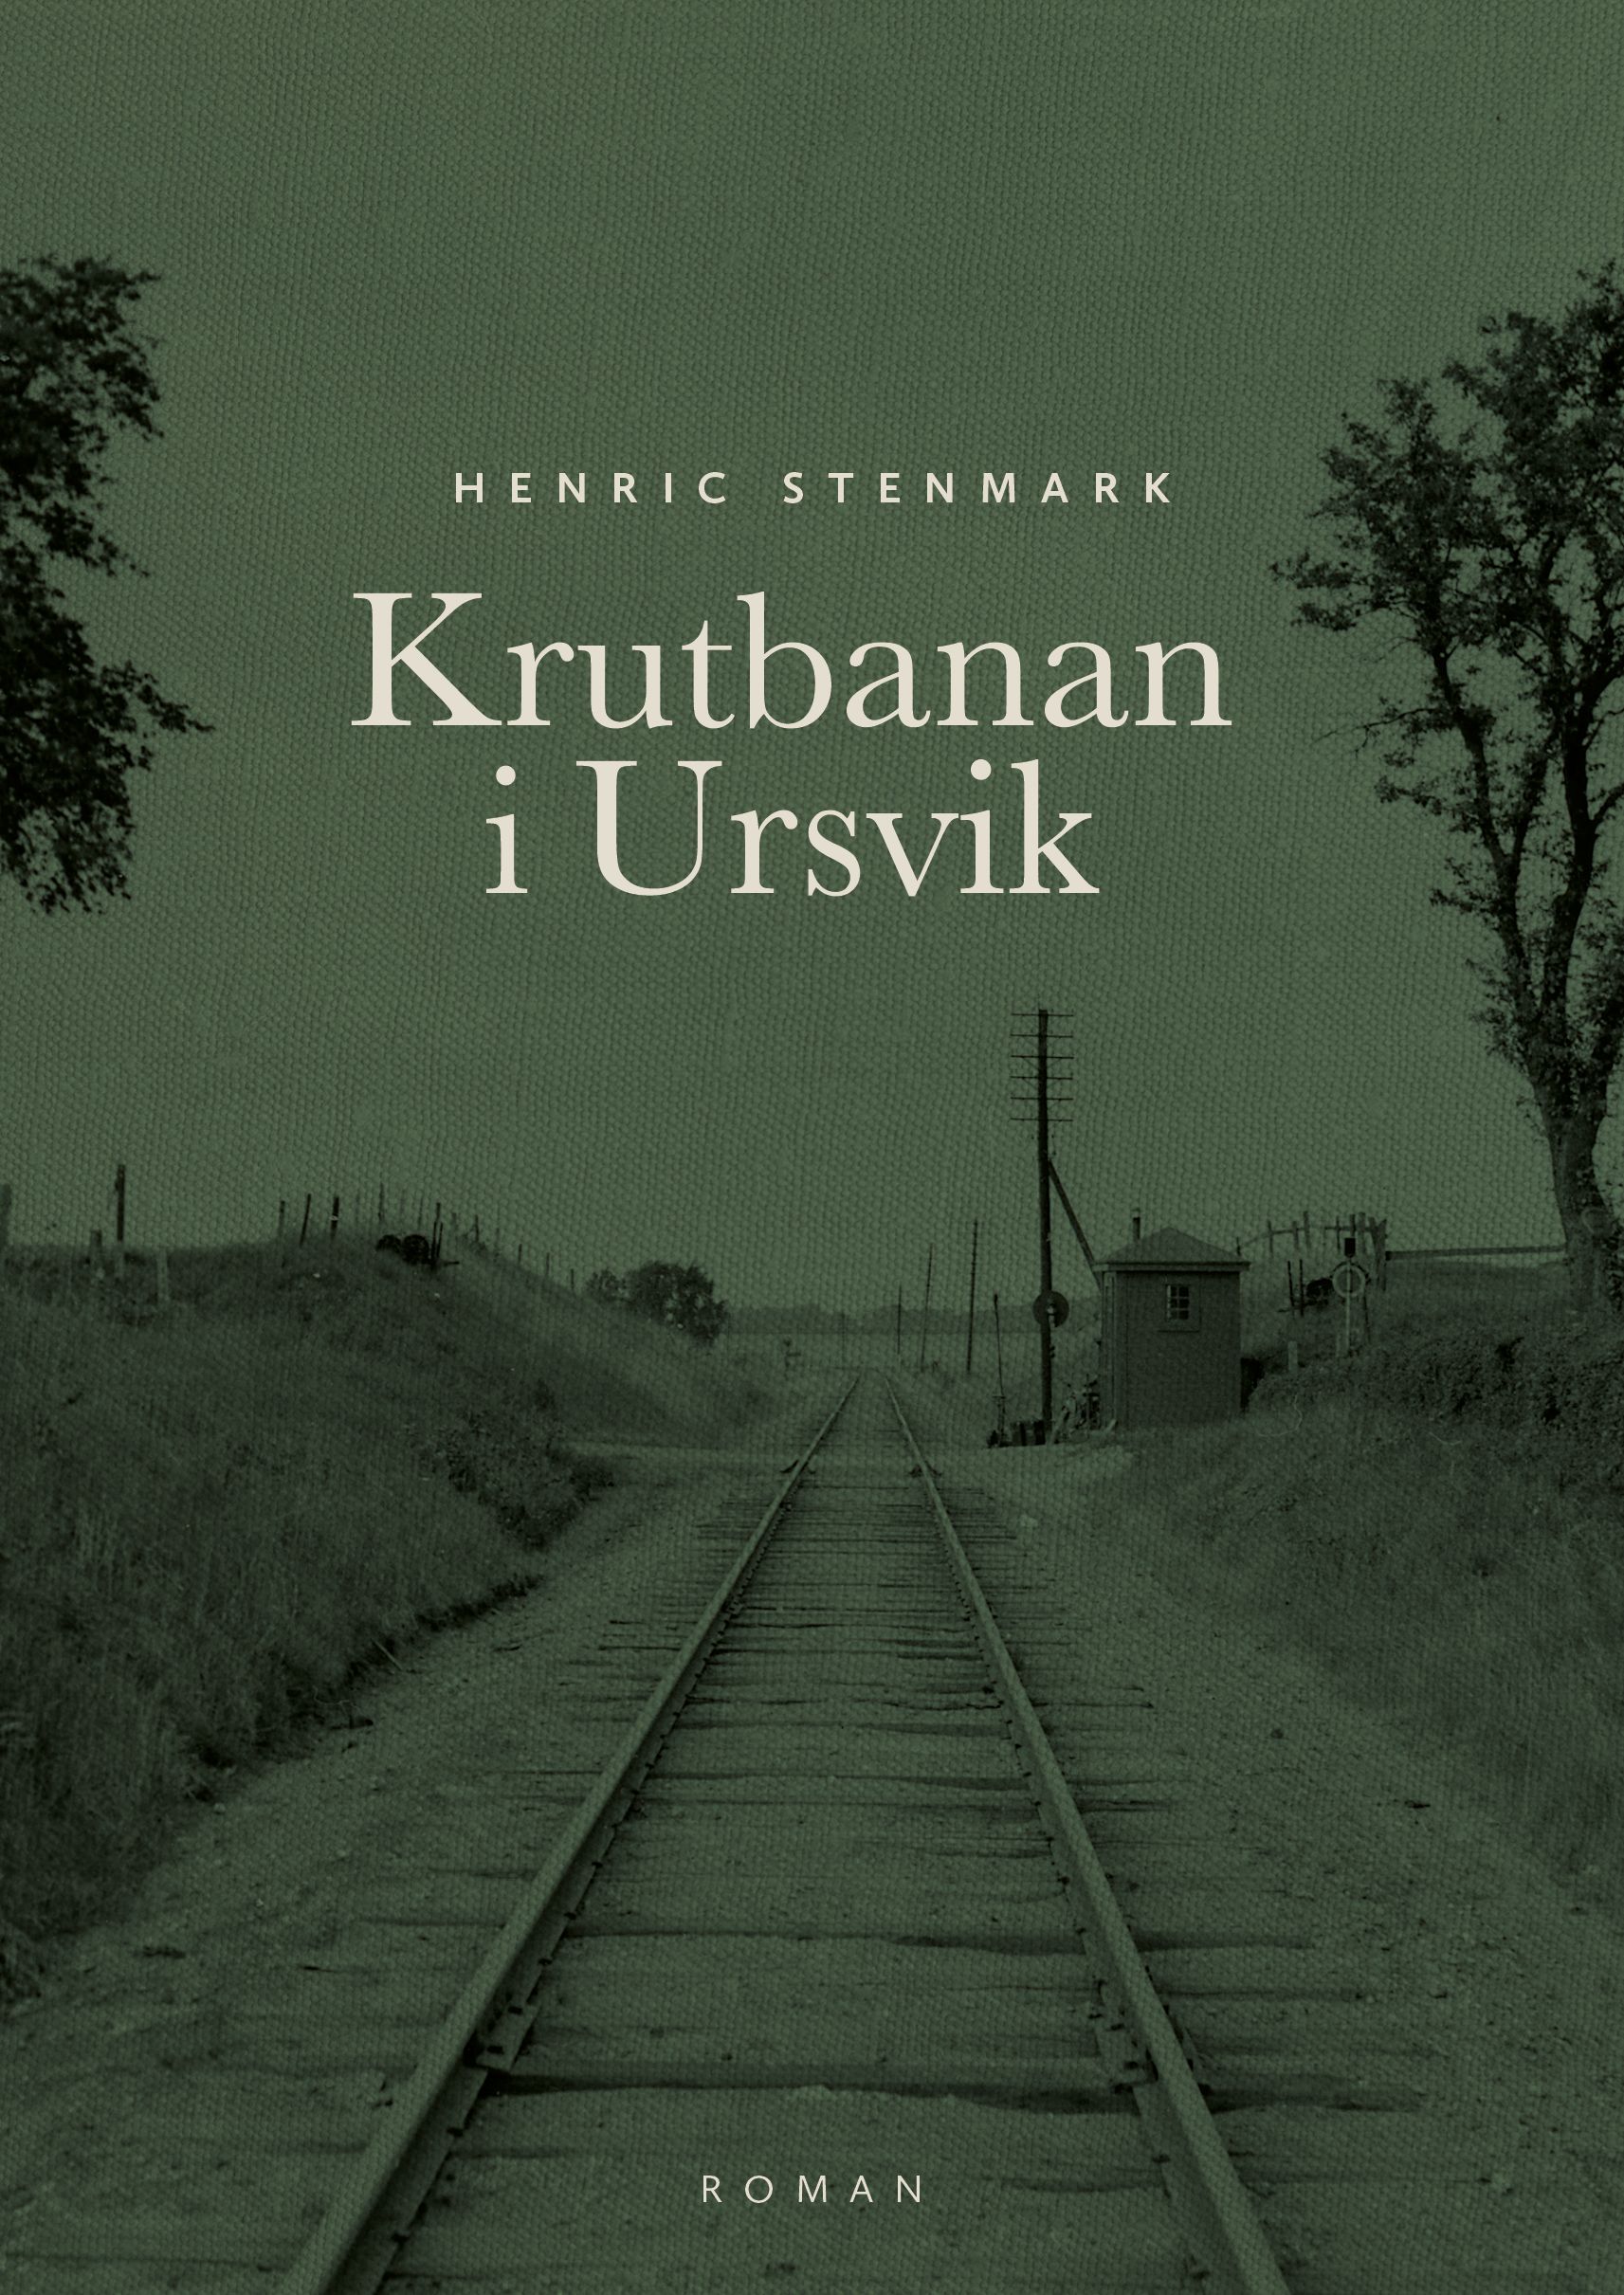 Krutbanan i Ursvik, eBook by Henric Stenmark